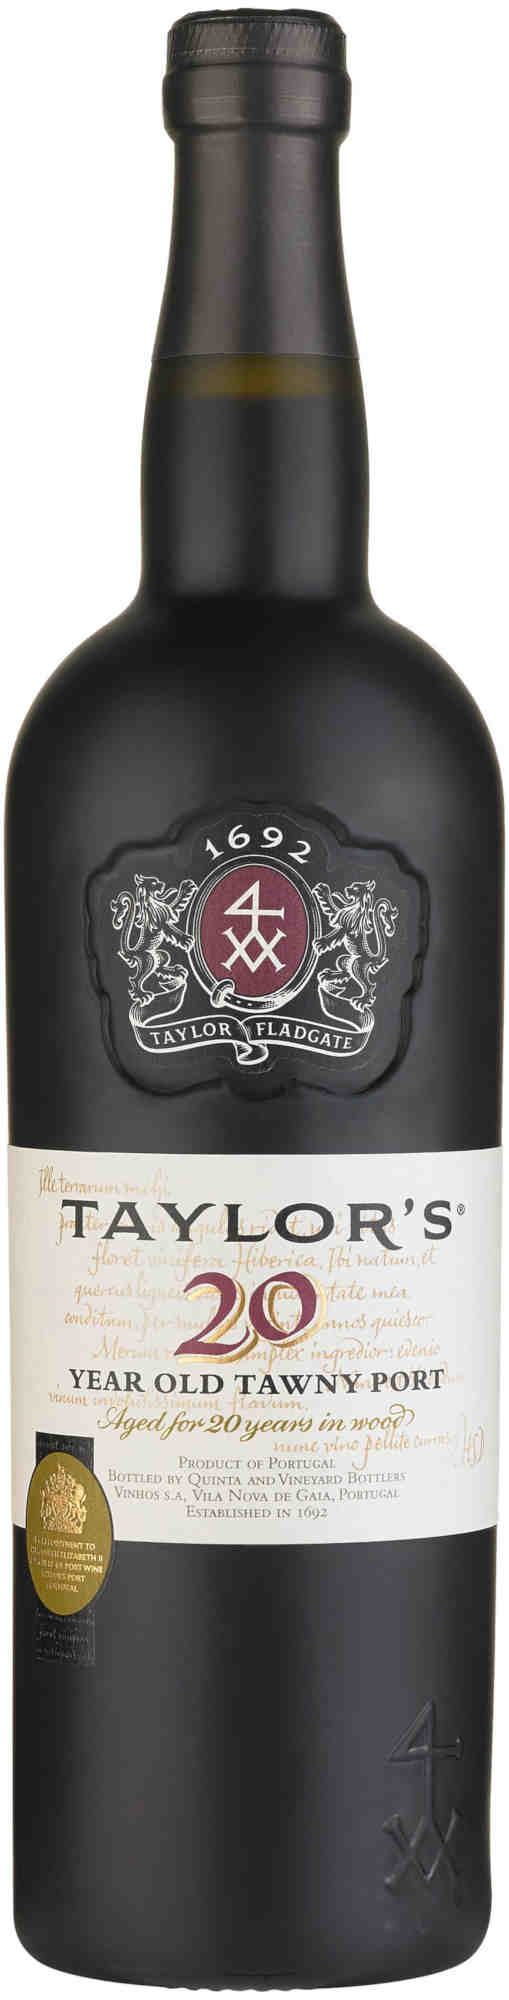 Taylors-20-Years-Tawny-Port